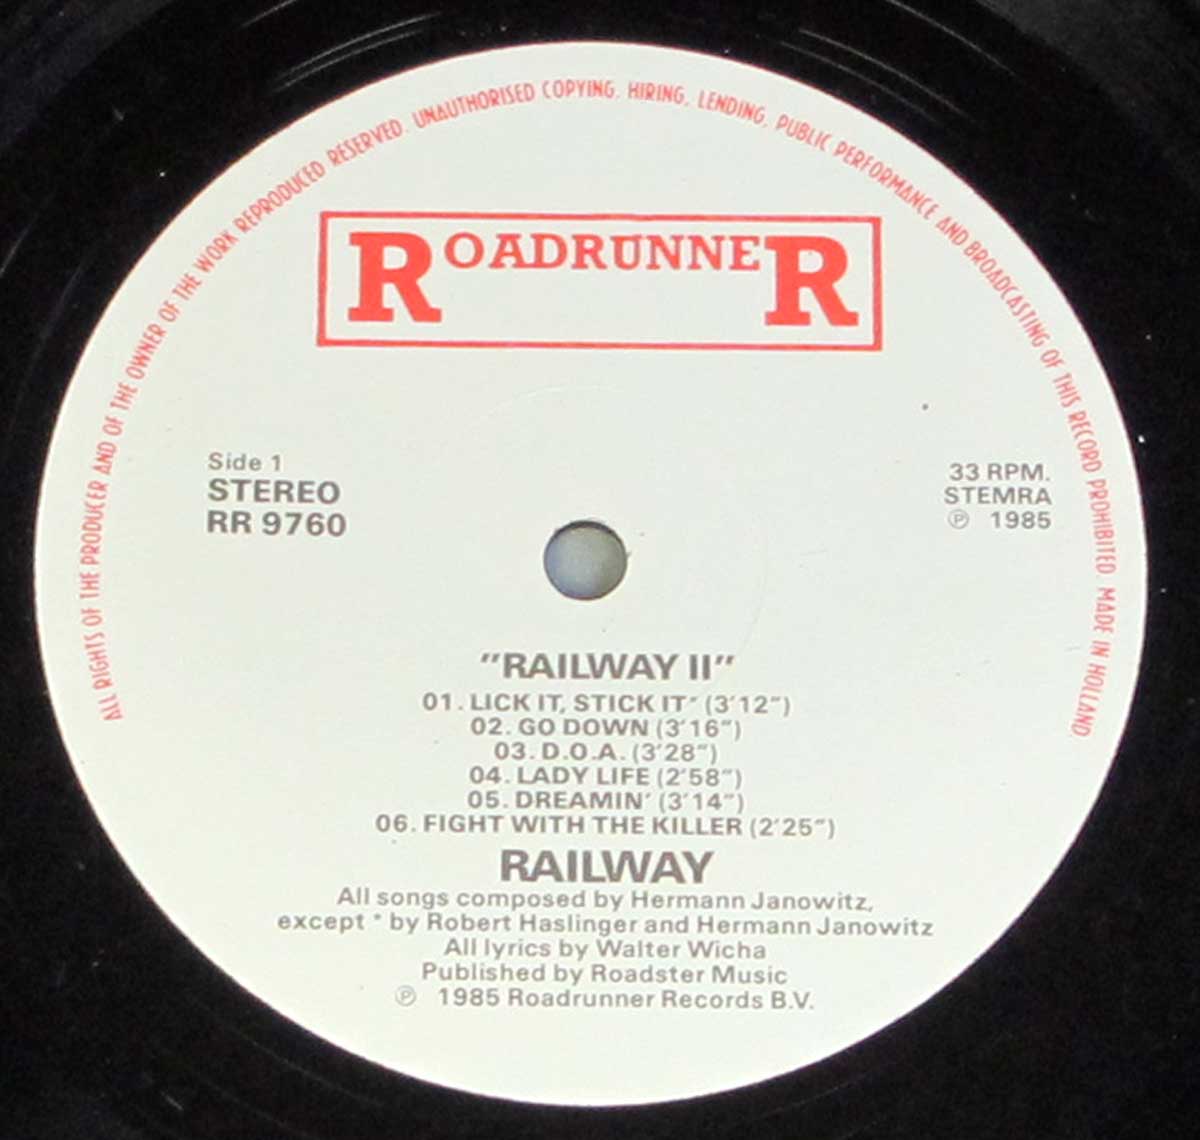 High Resolution Photo Record Label of RAILWAY - Railway II https://vinyl-records.nl